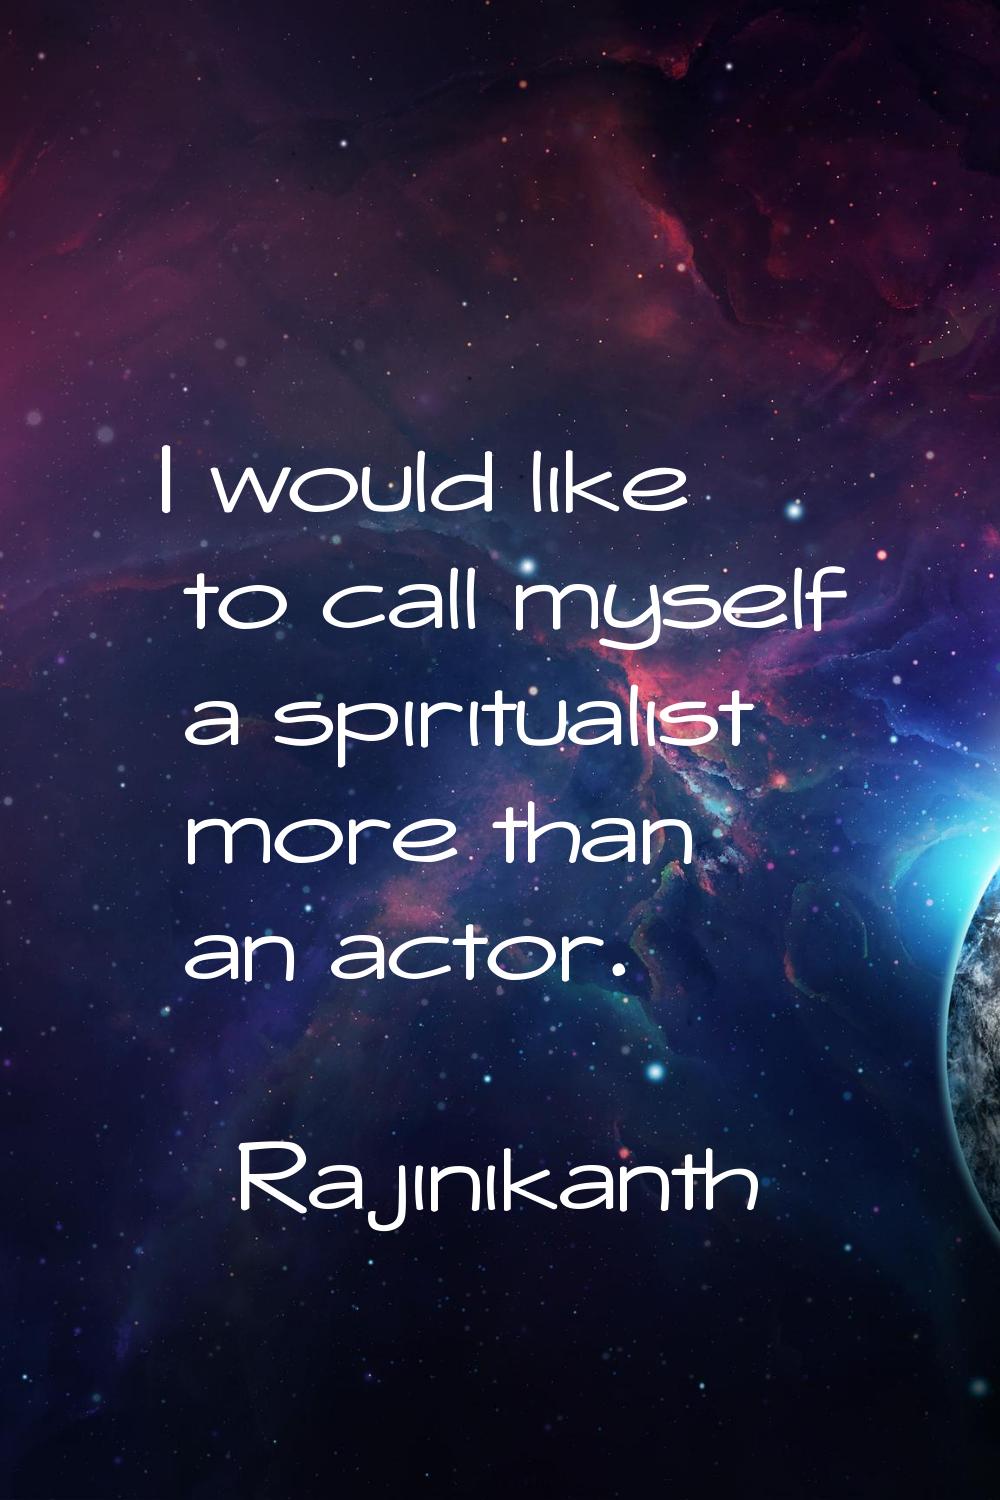 I would like to call myself a spiritualist more than an actor.